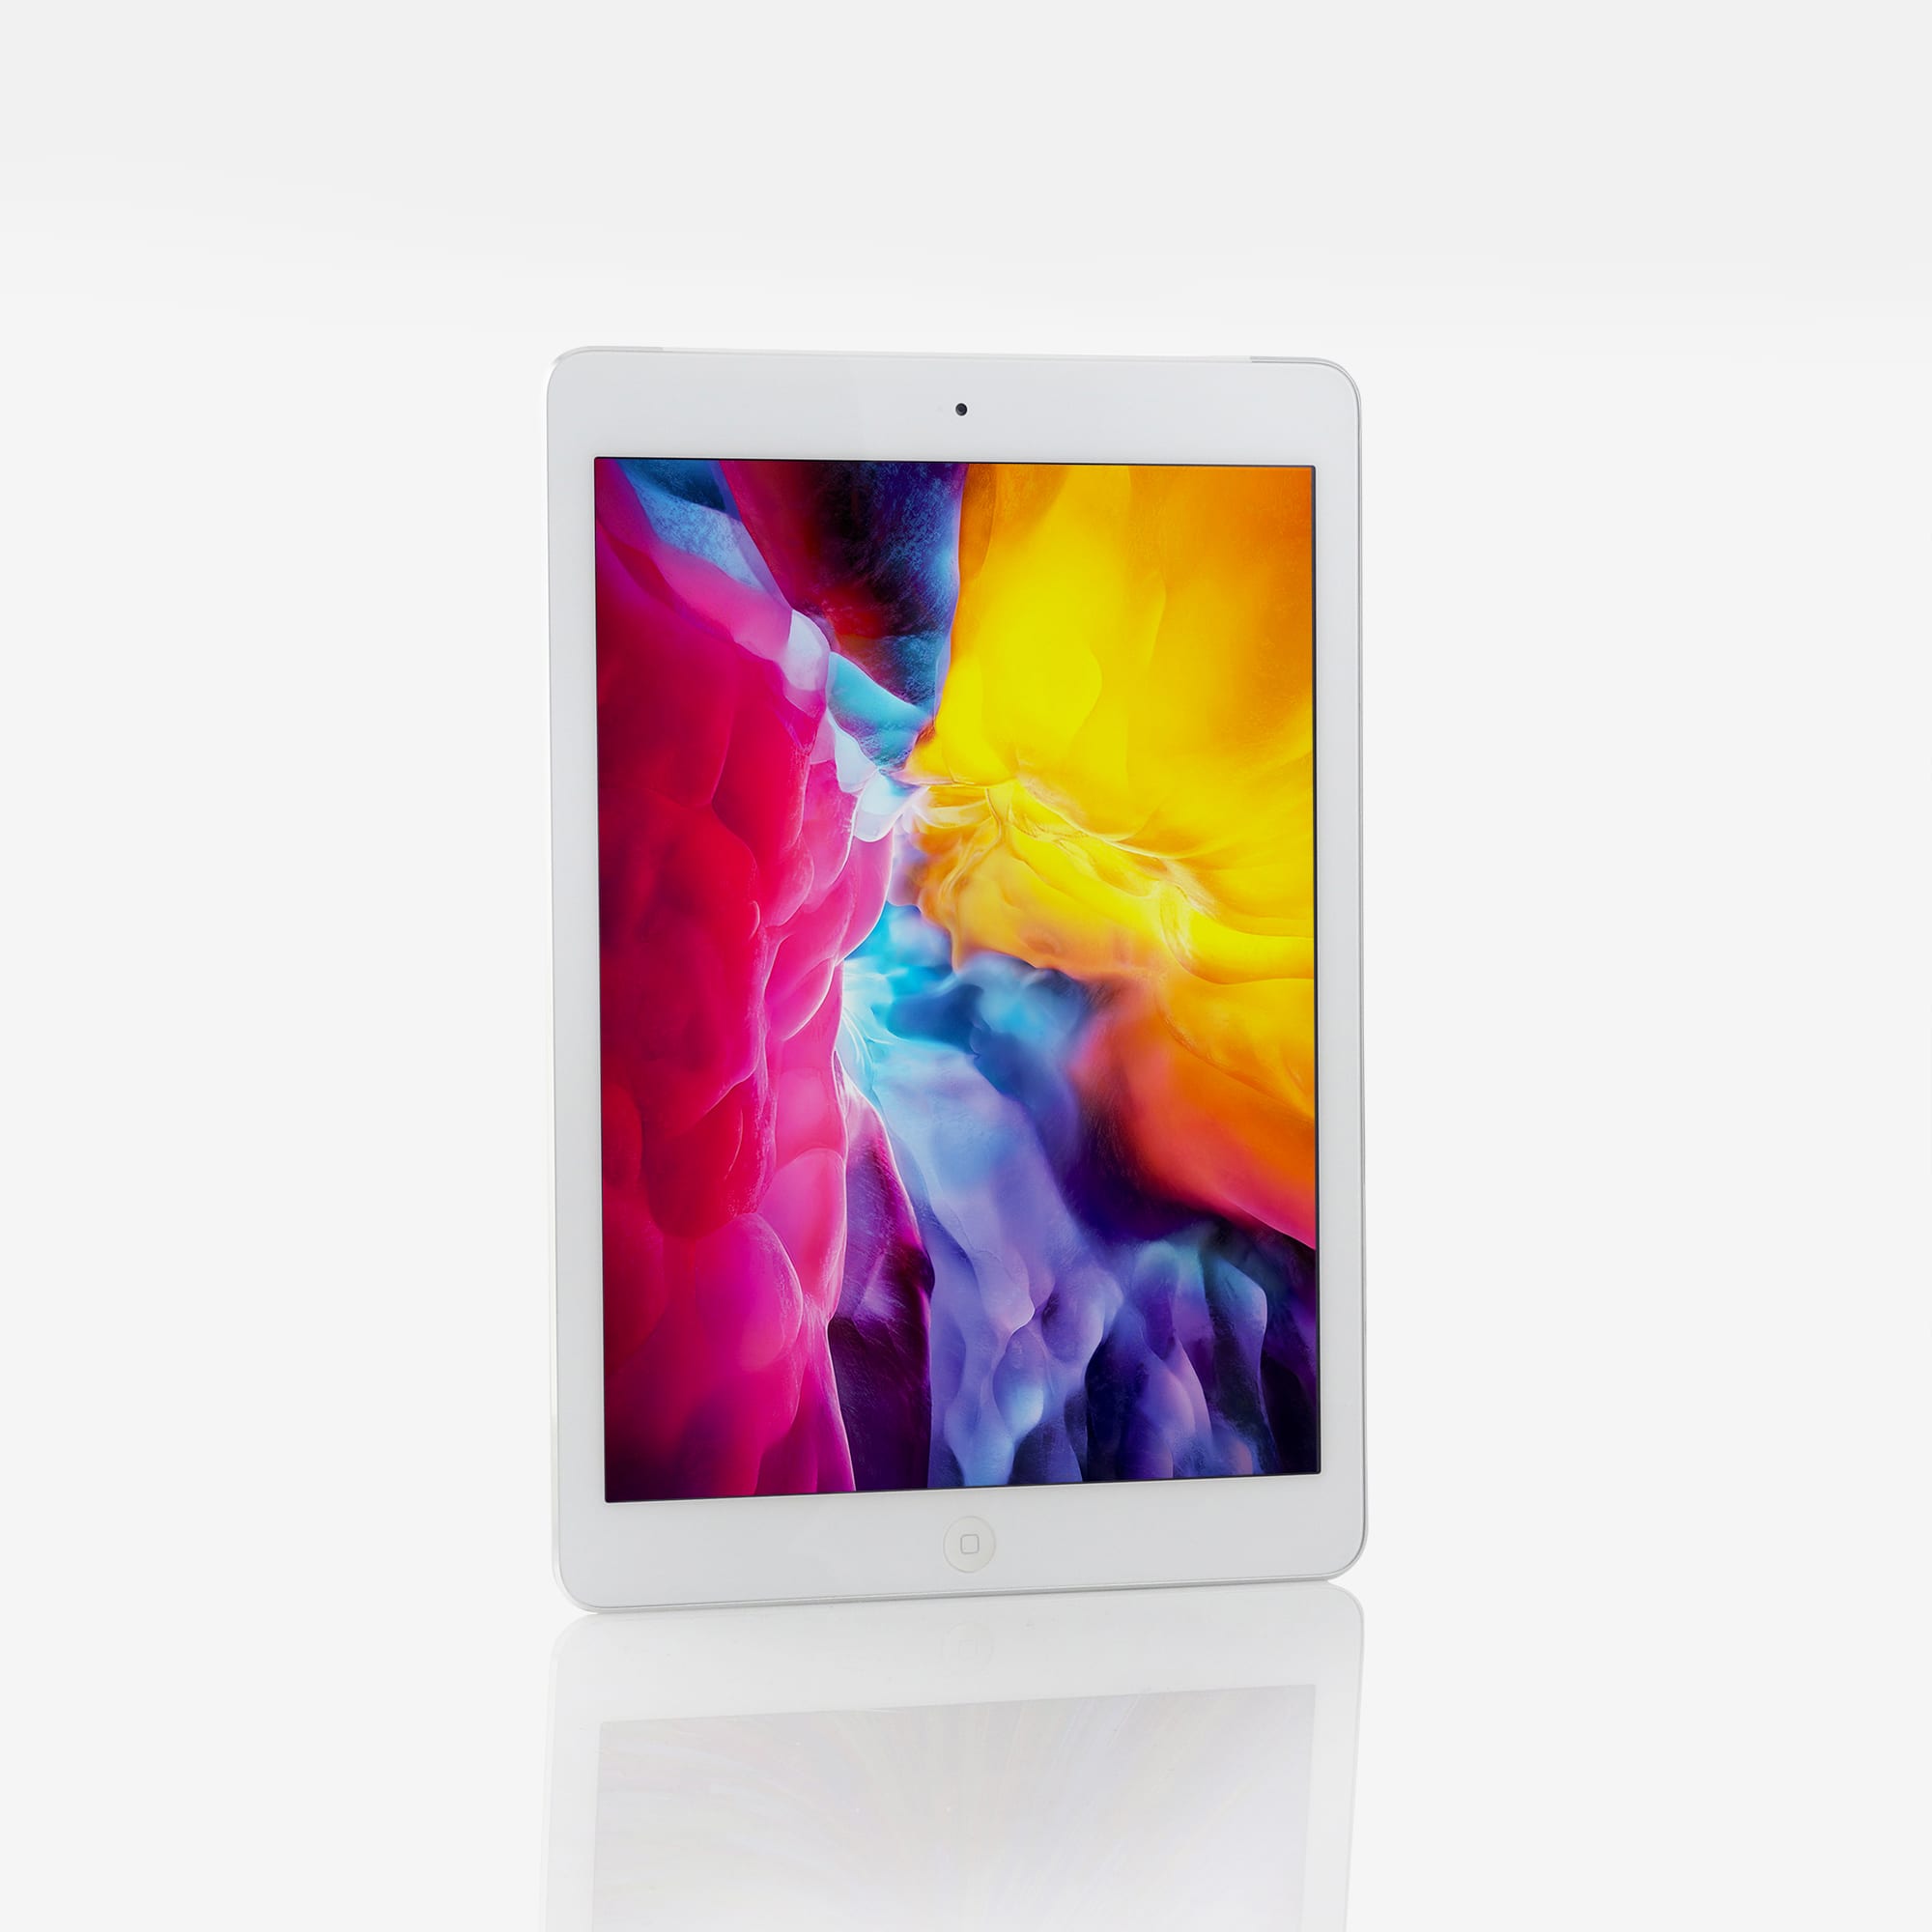 1 x iPad Air (Wi-Fi + Cellular) Silver (2013)